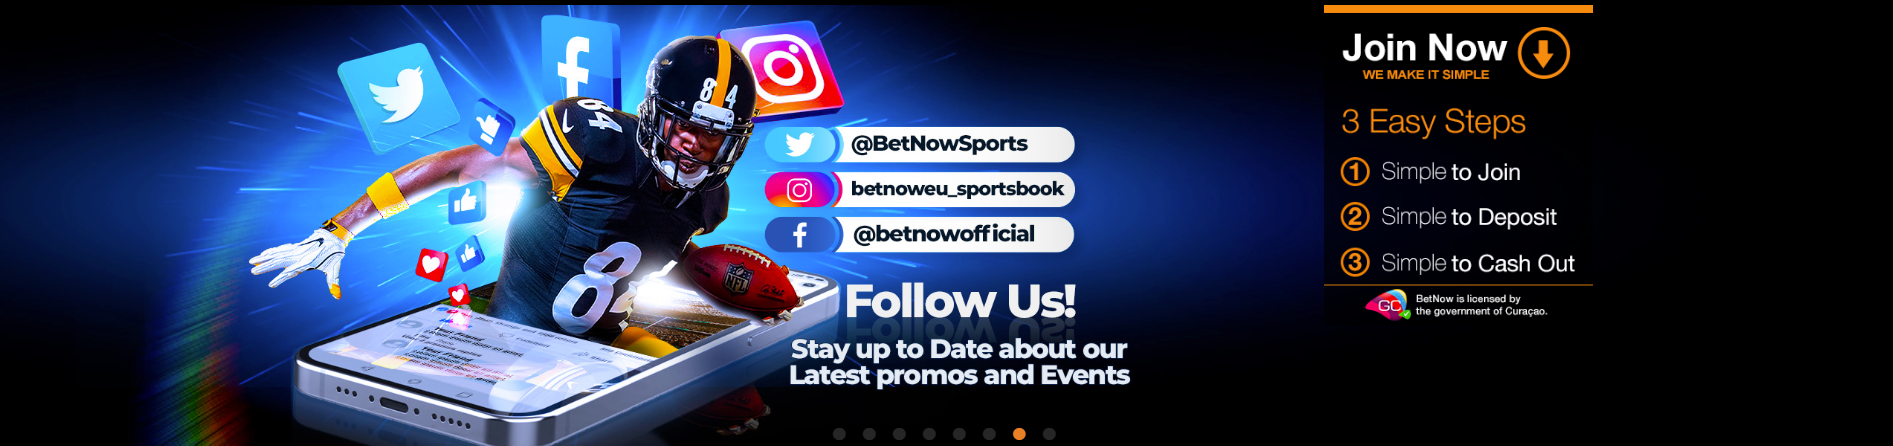 Betnow Sportsbook